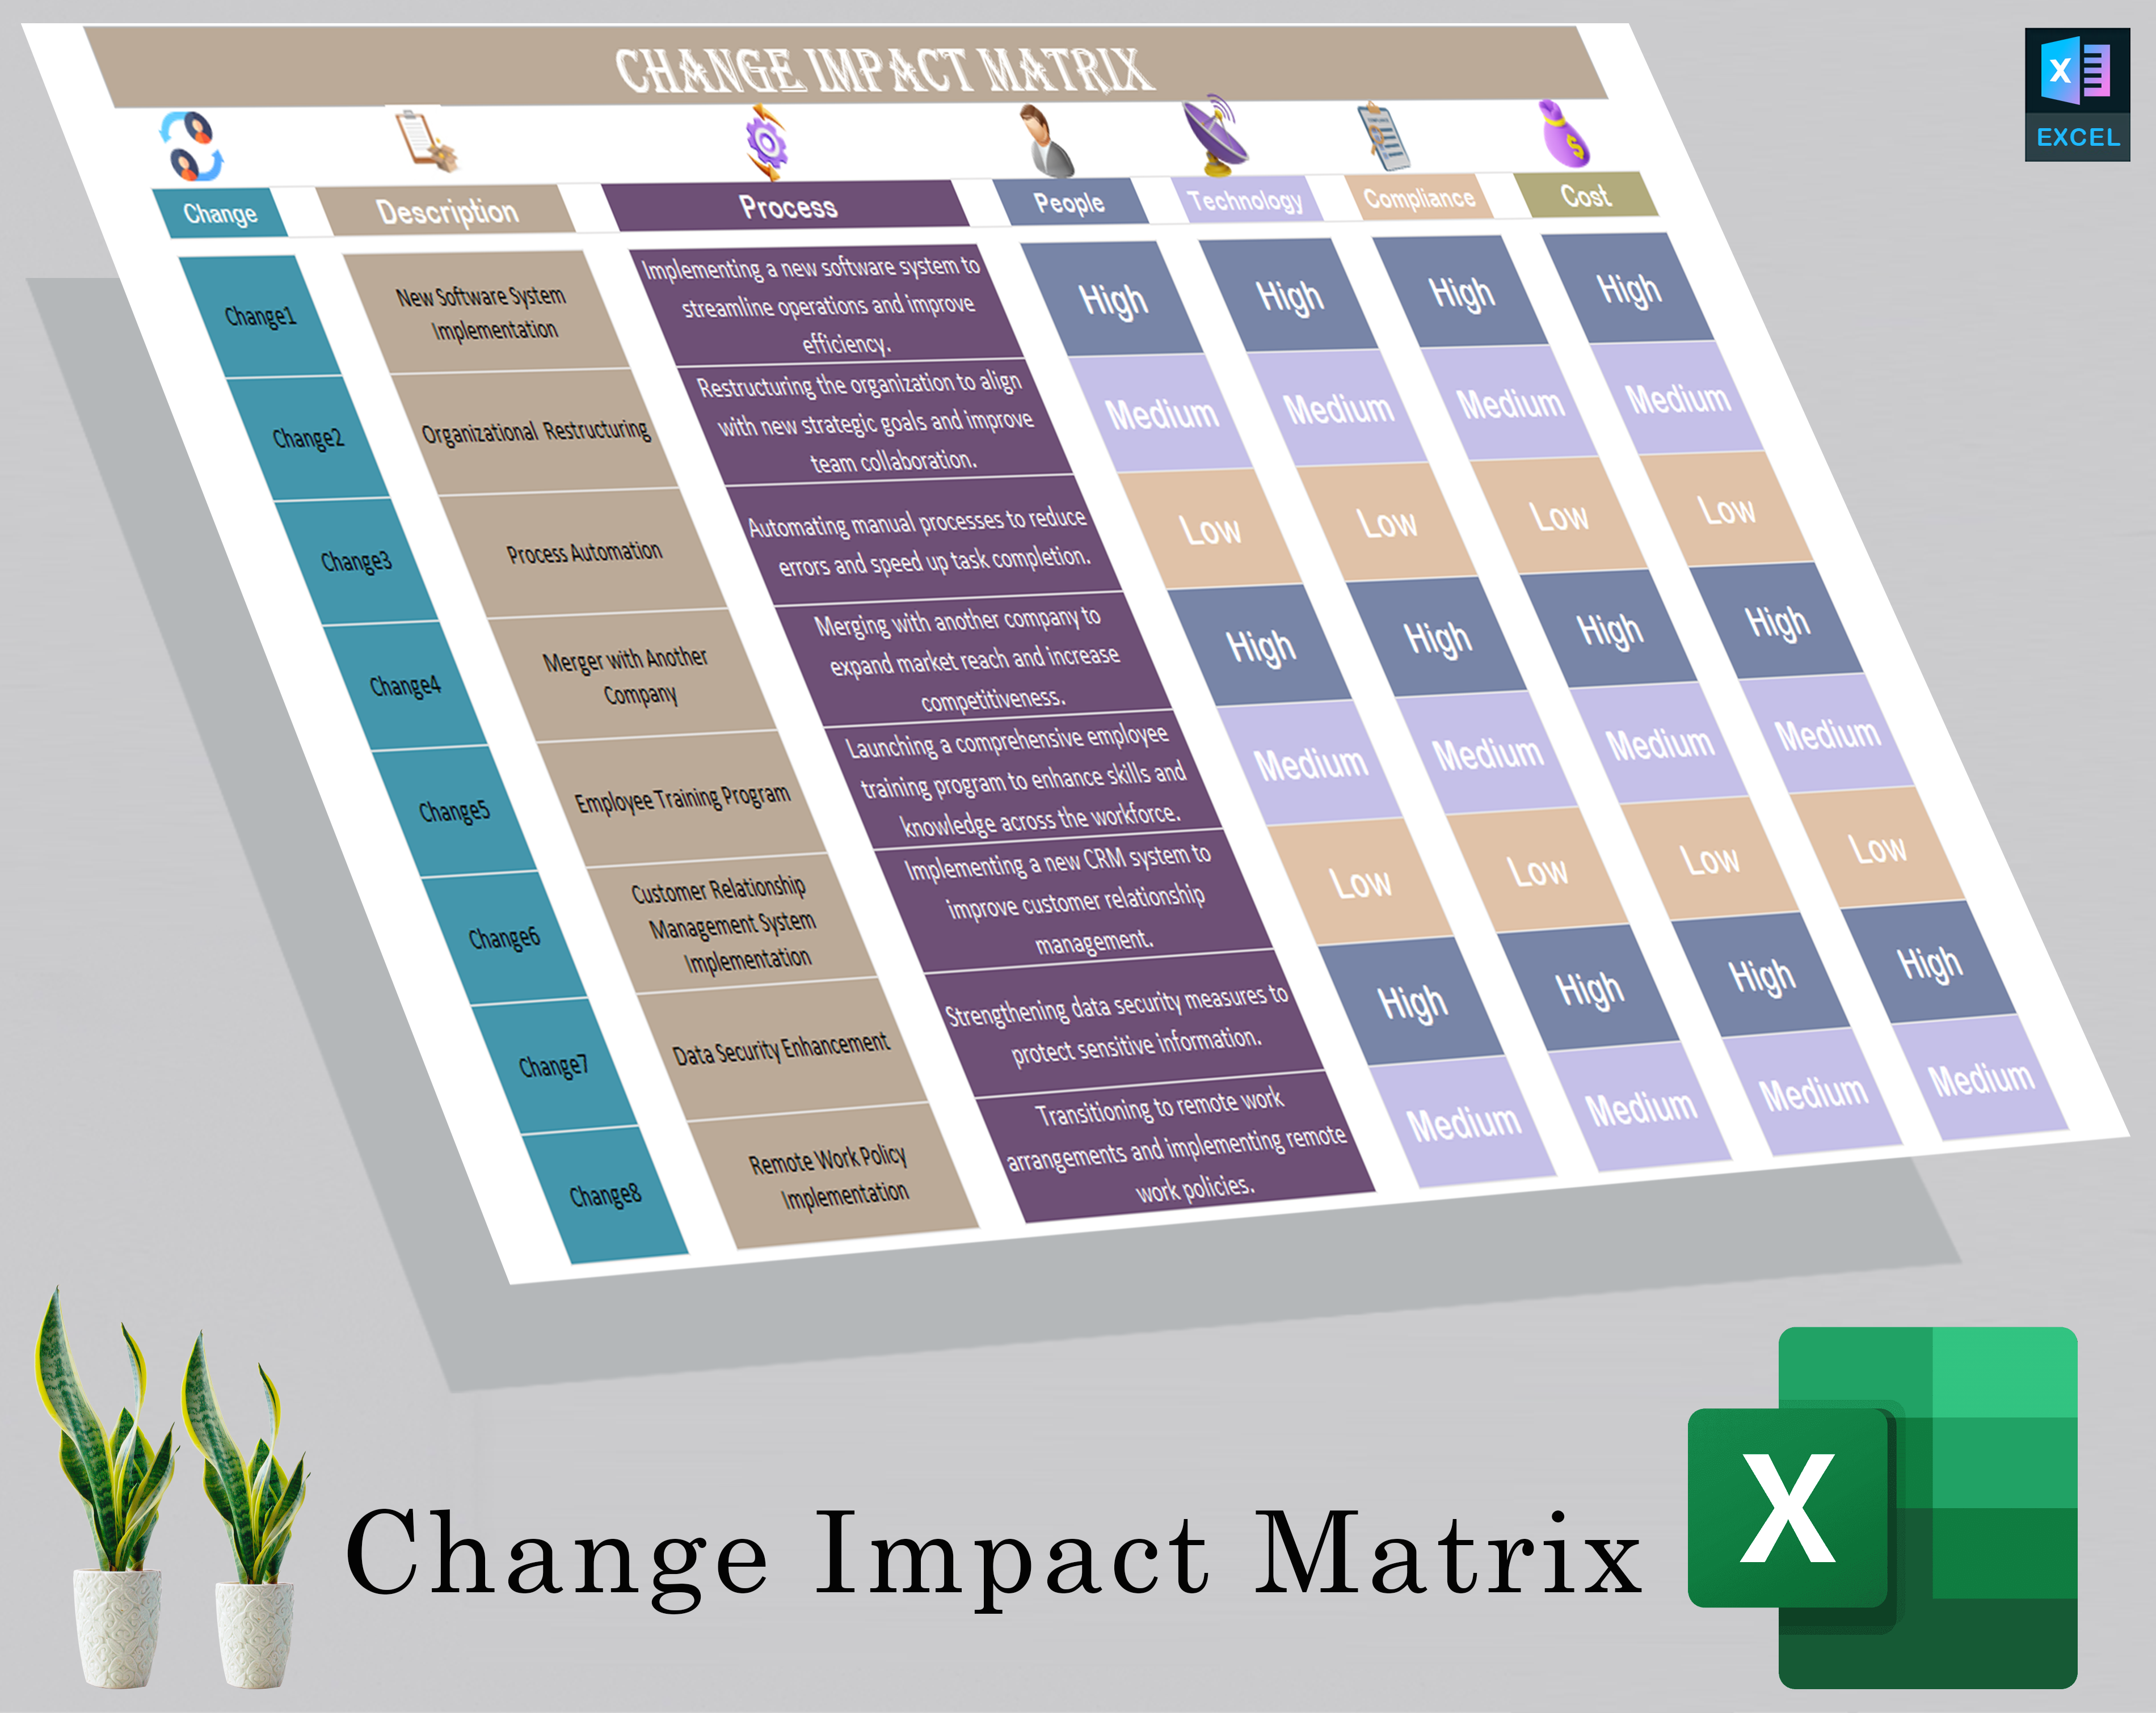 Change Impact Matrix